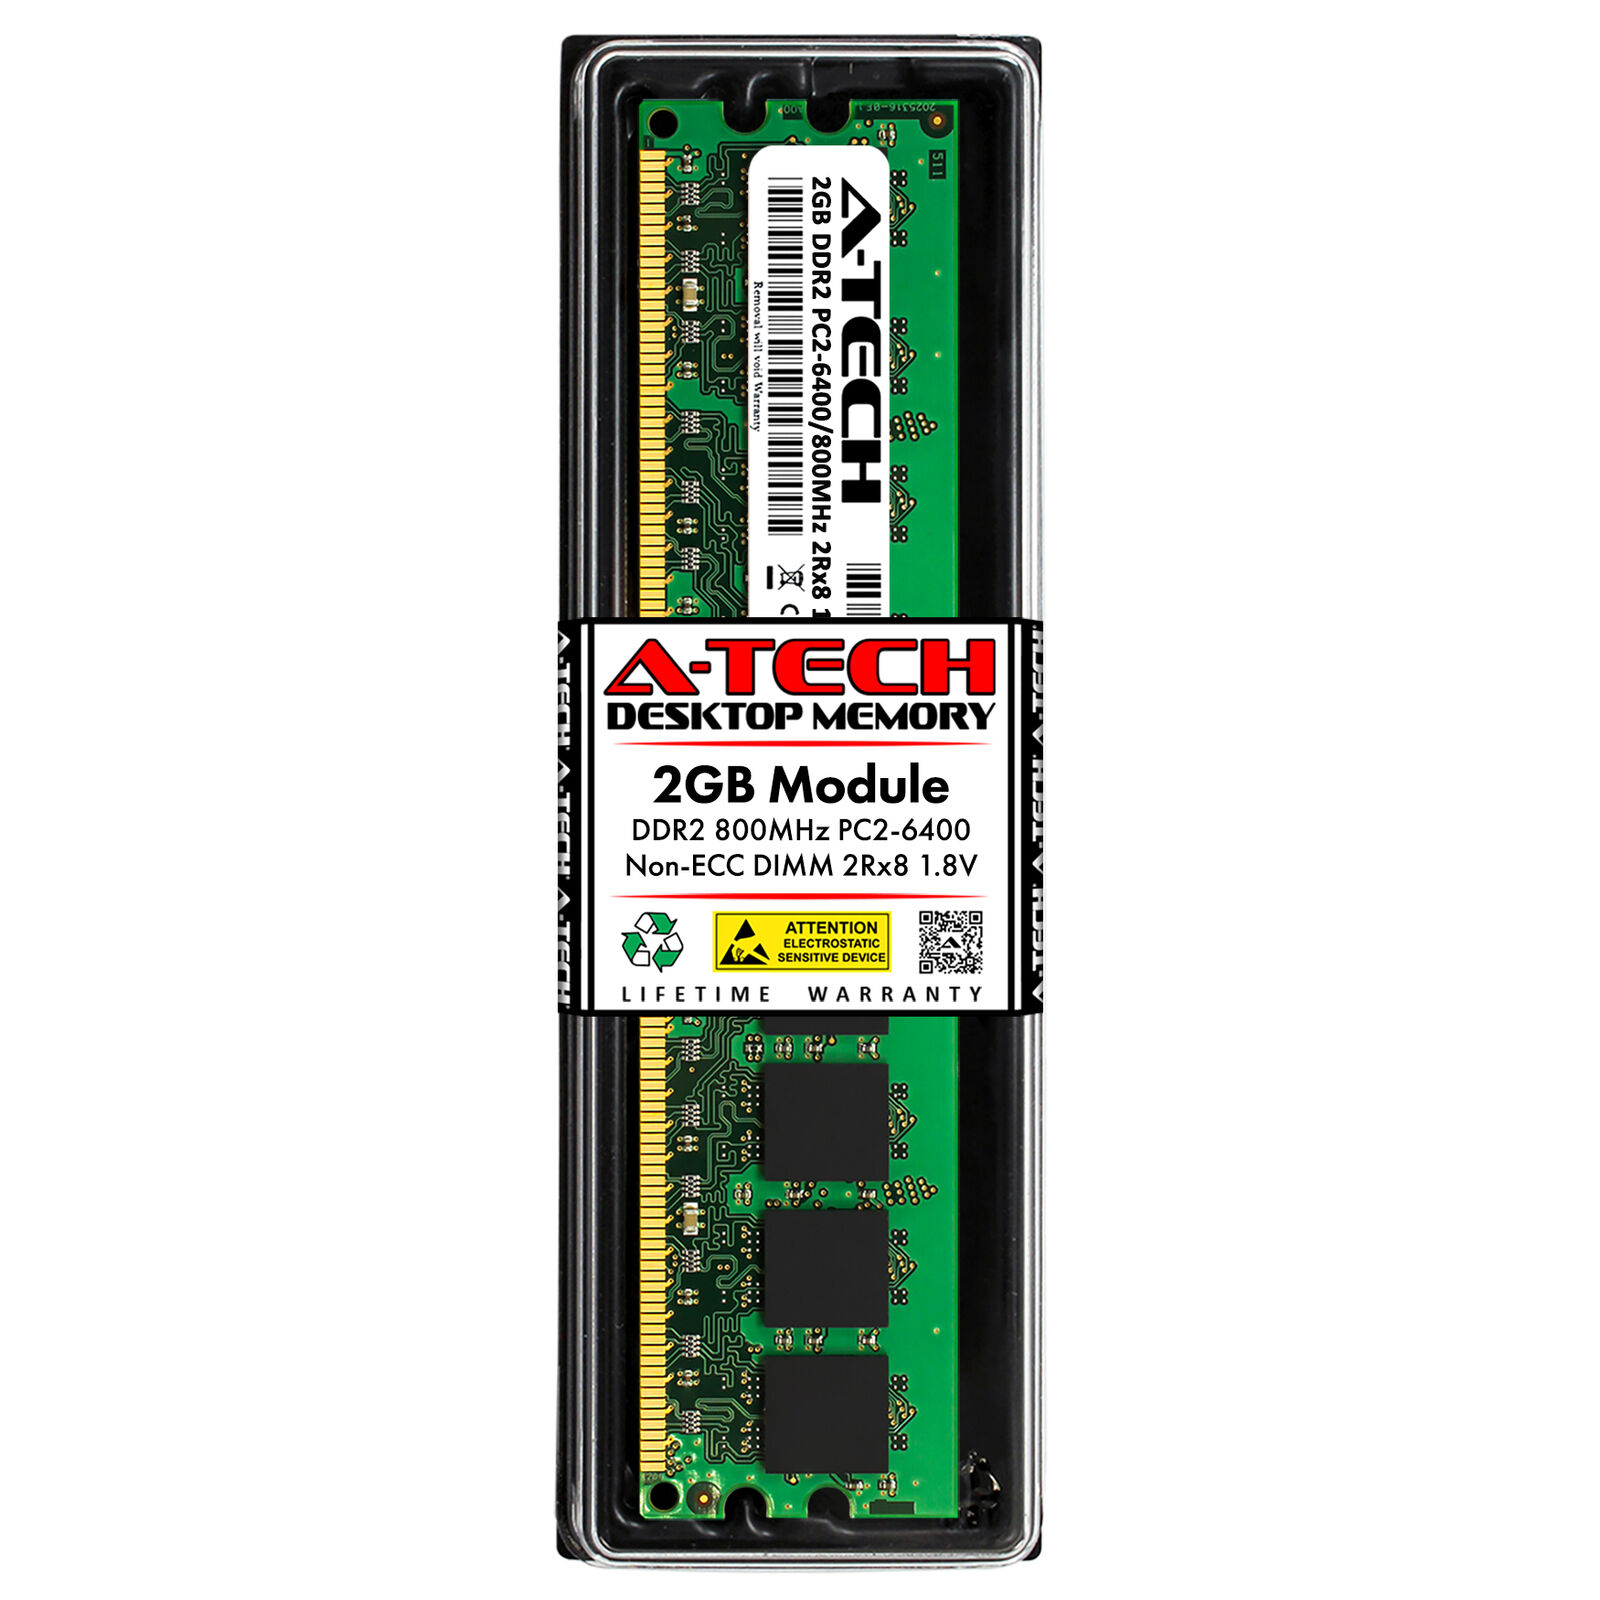 2GB DDR2-800 DIMM Micron MT16HTF25664AY-800J1 Equivalent Desktop Memory RAM